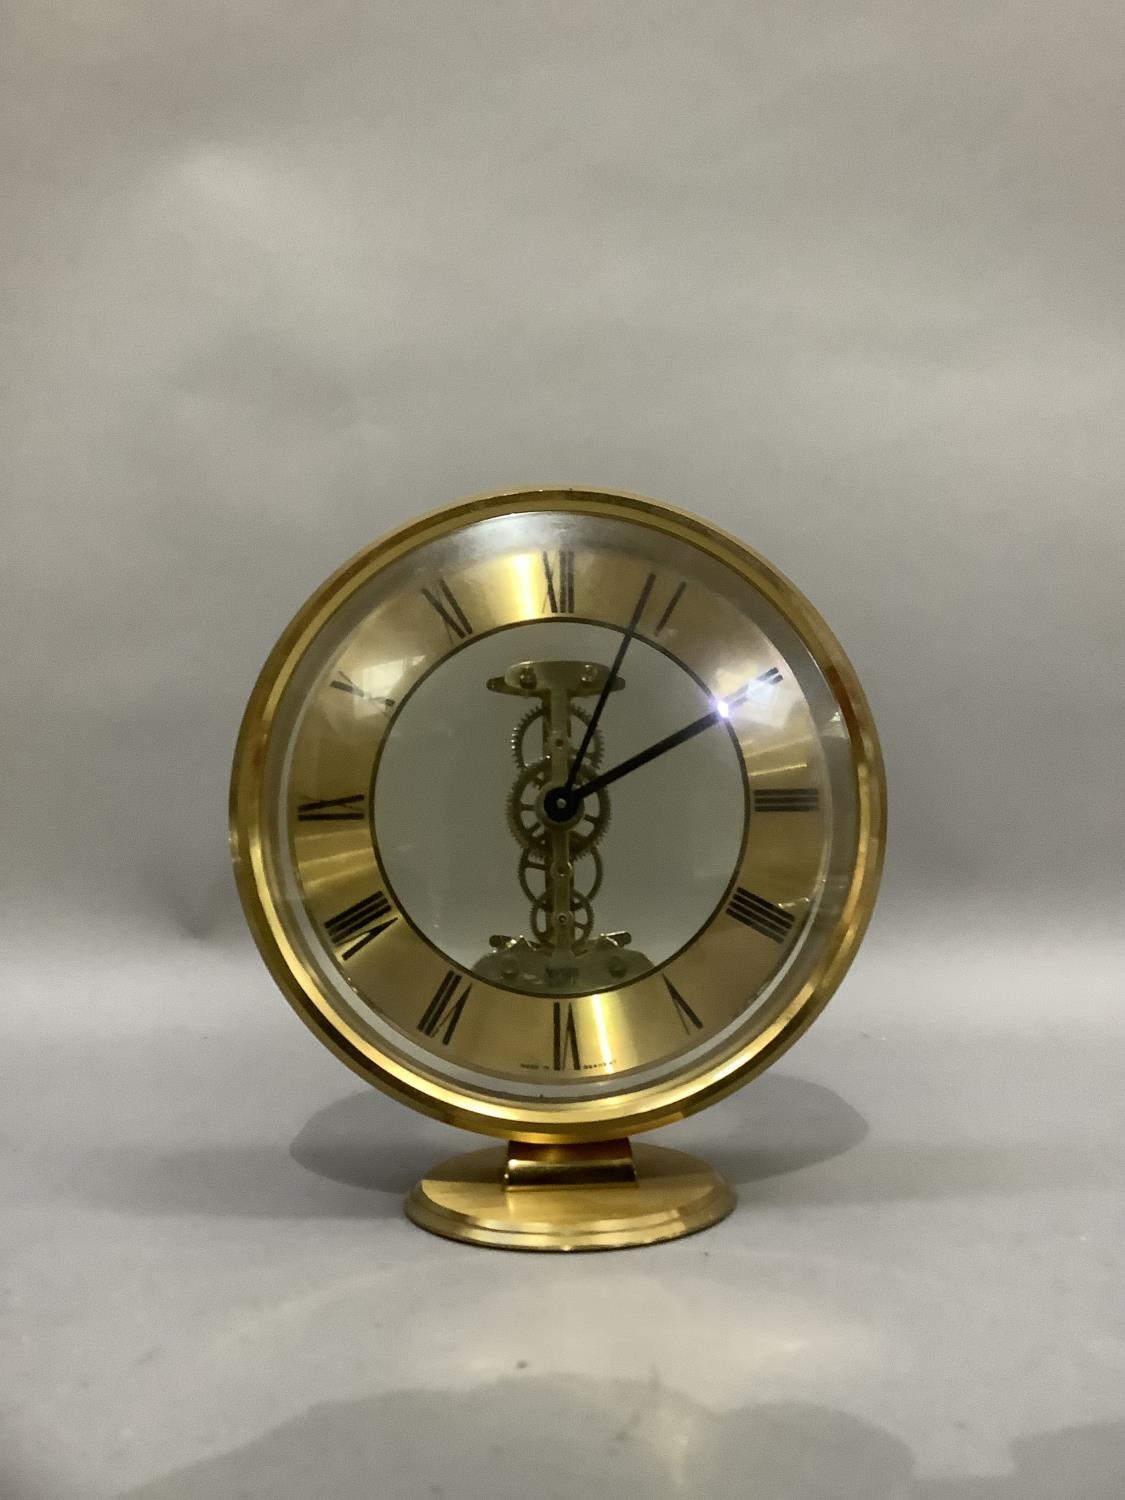 An Acctim gilt metal mantel clock with exposed quartz movement, circular chaptering with black Roman